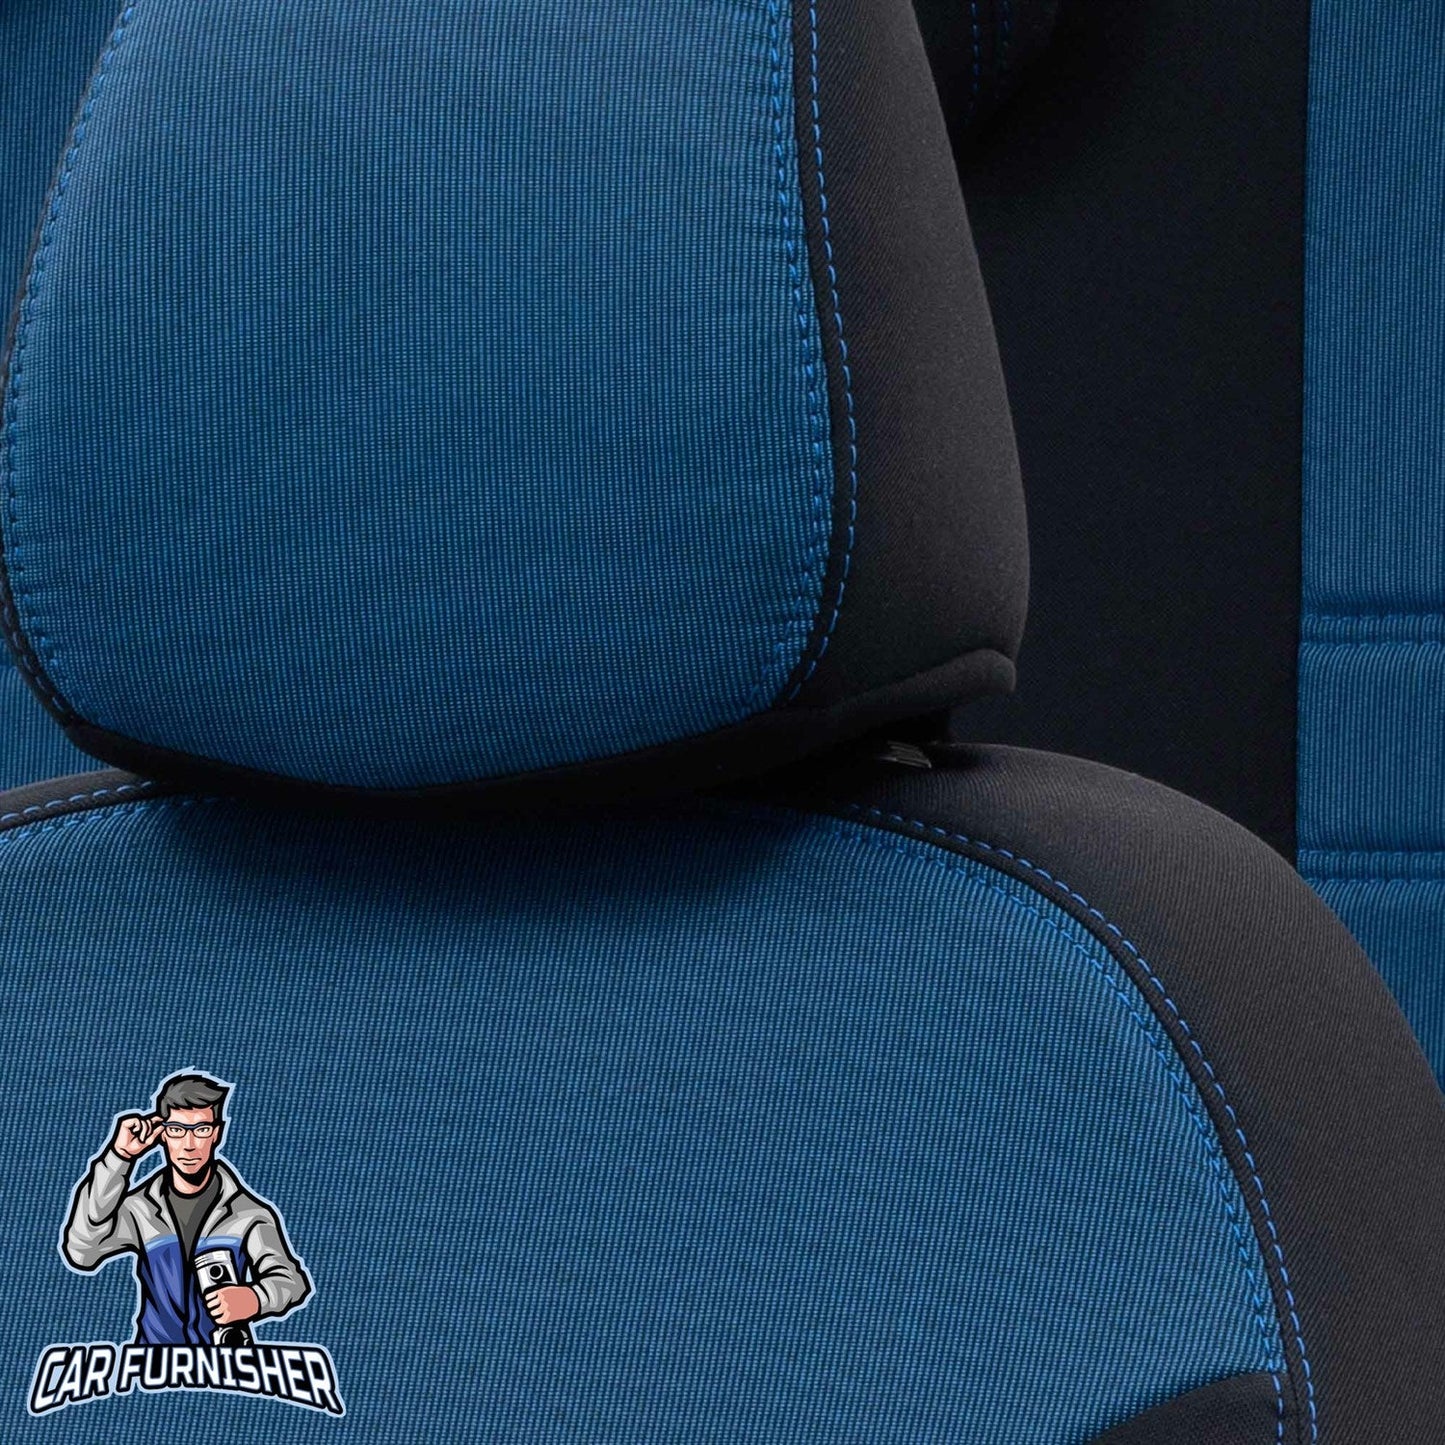 Volvo XC60 Seat Cover Original Jacquard Design Blue Jacquard Fabric